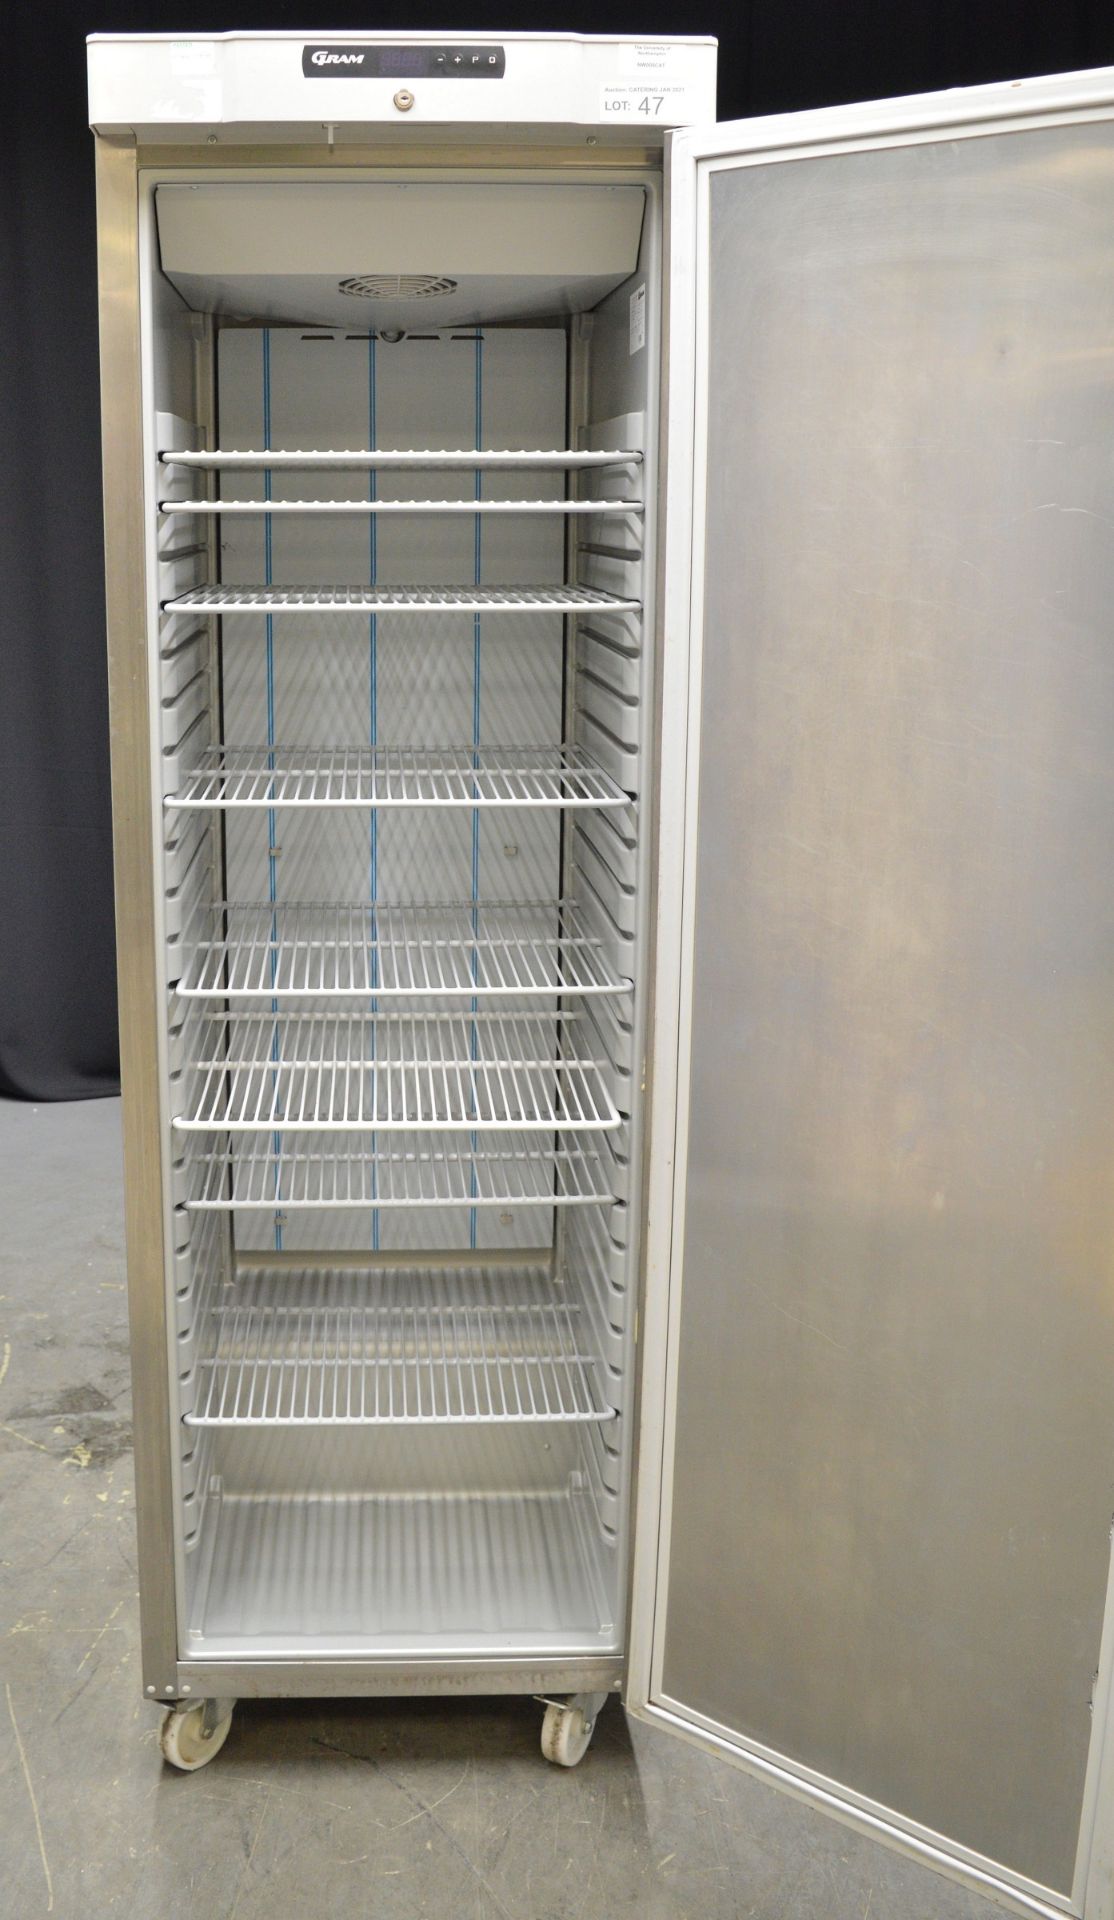 Gram F410 RG C 6N Stainless Steel Upright Freezer - Image 5 of 6